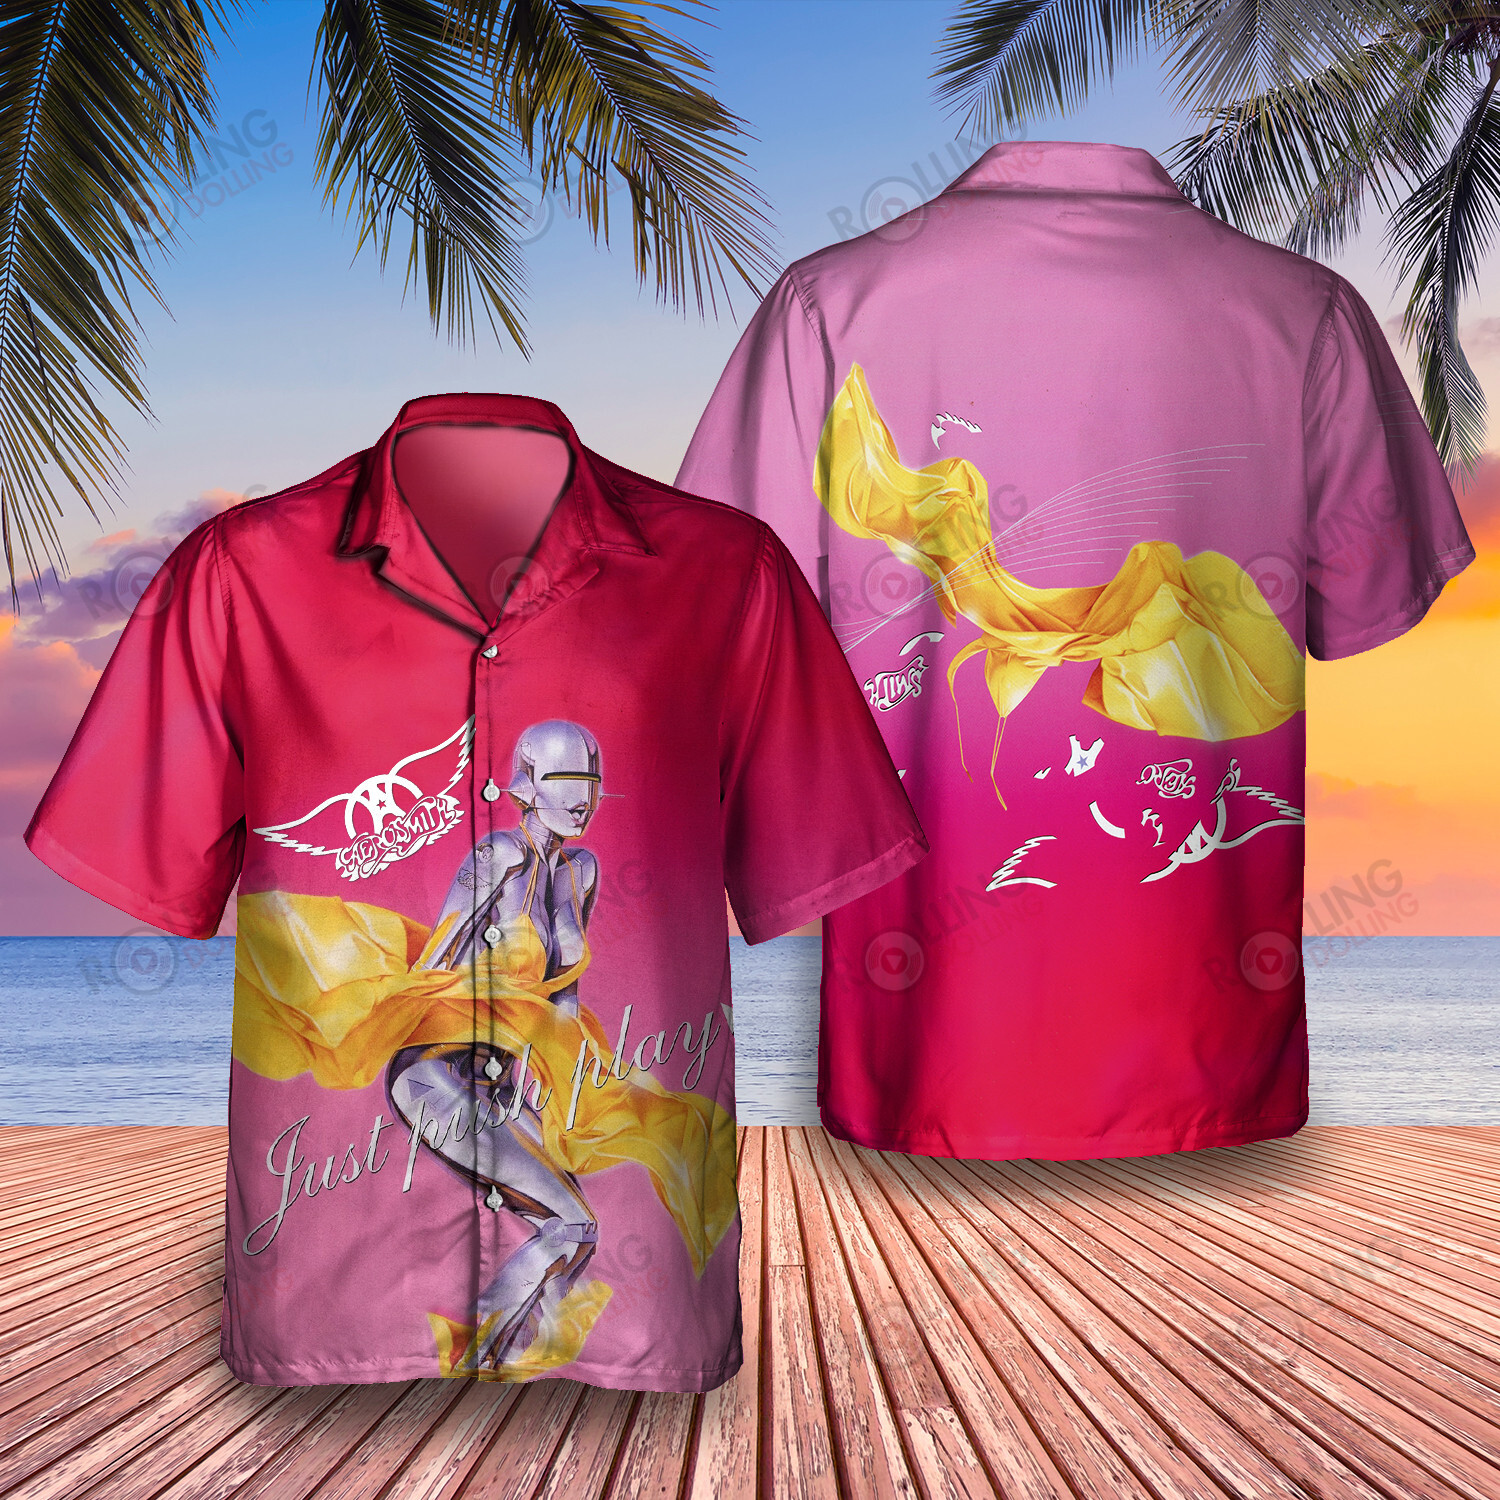 Regardless of their style, you will feel comfortable wearing Hawaiian Shirt 81